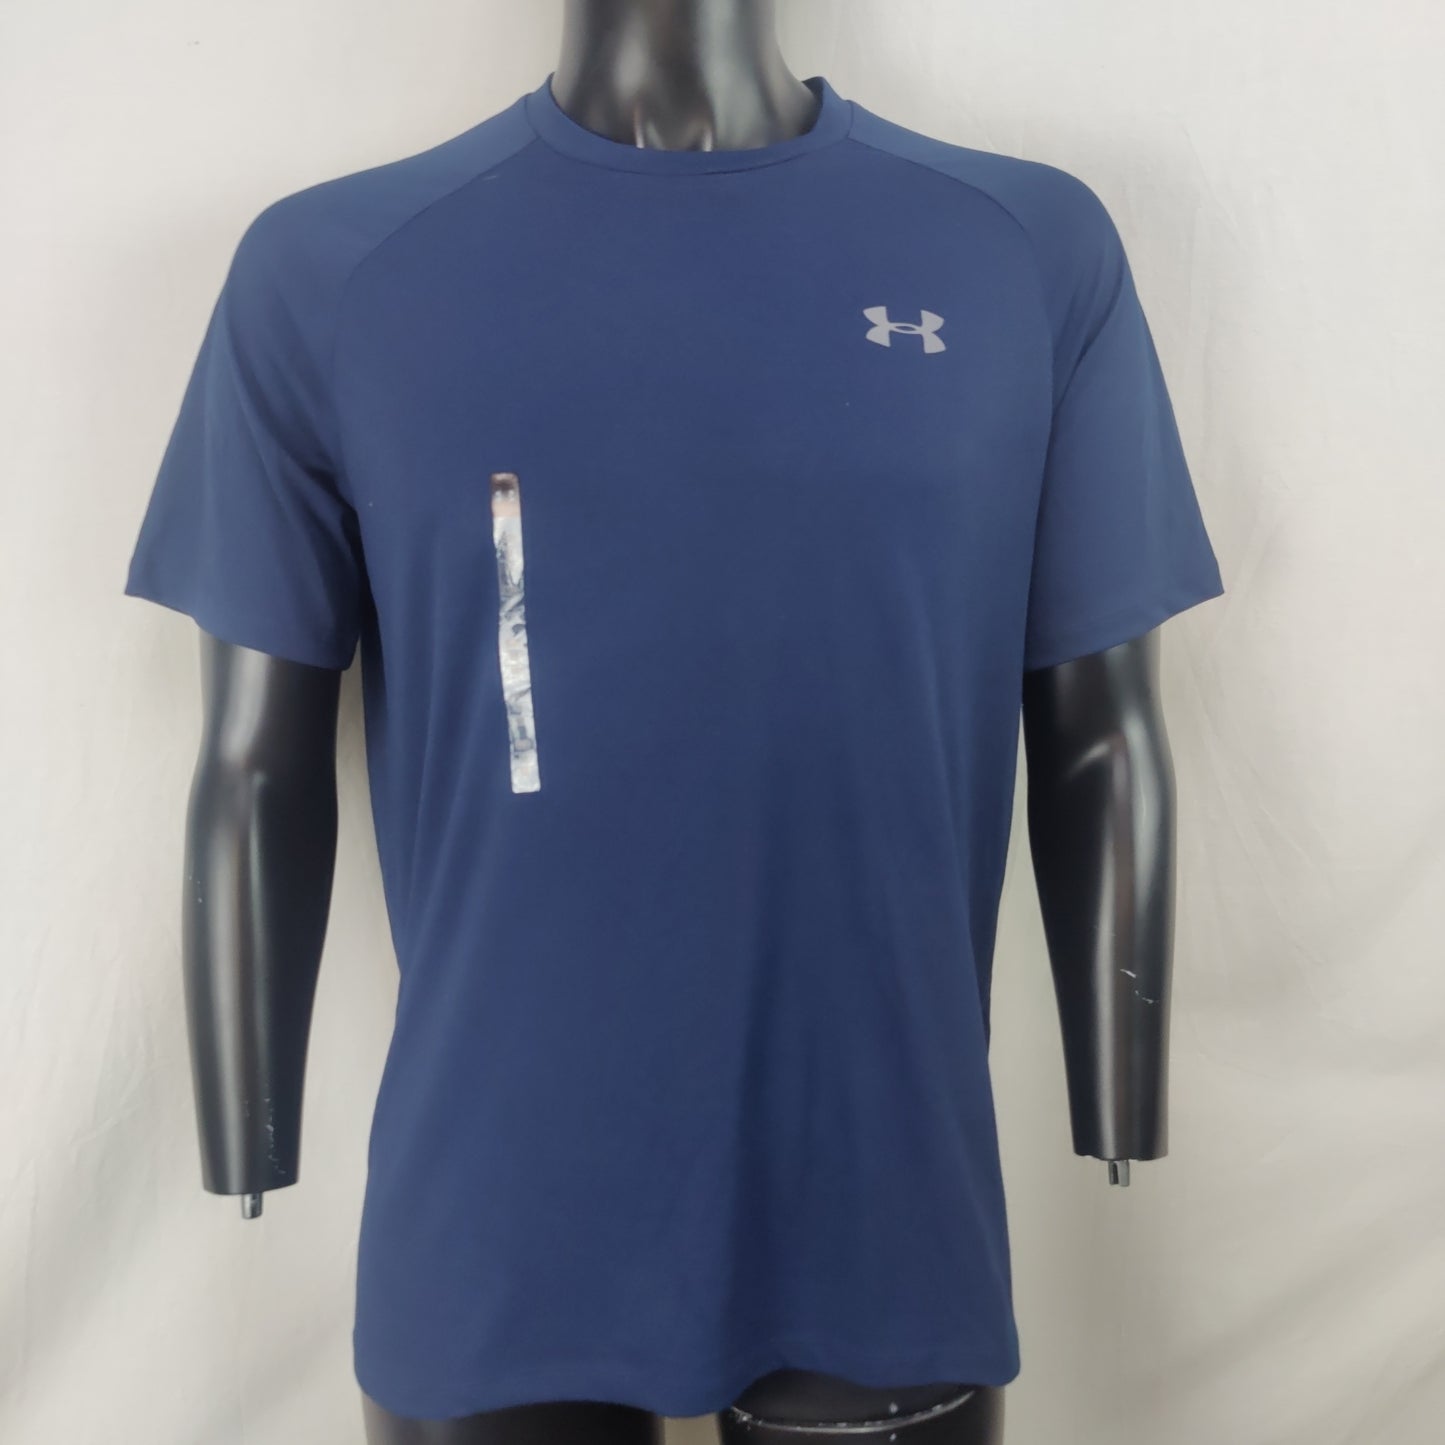 Under Armour Blue Short Sleeve Gym Training T-Shirt Men Size Medium